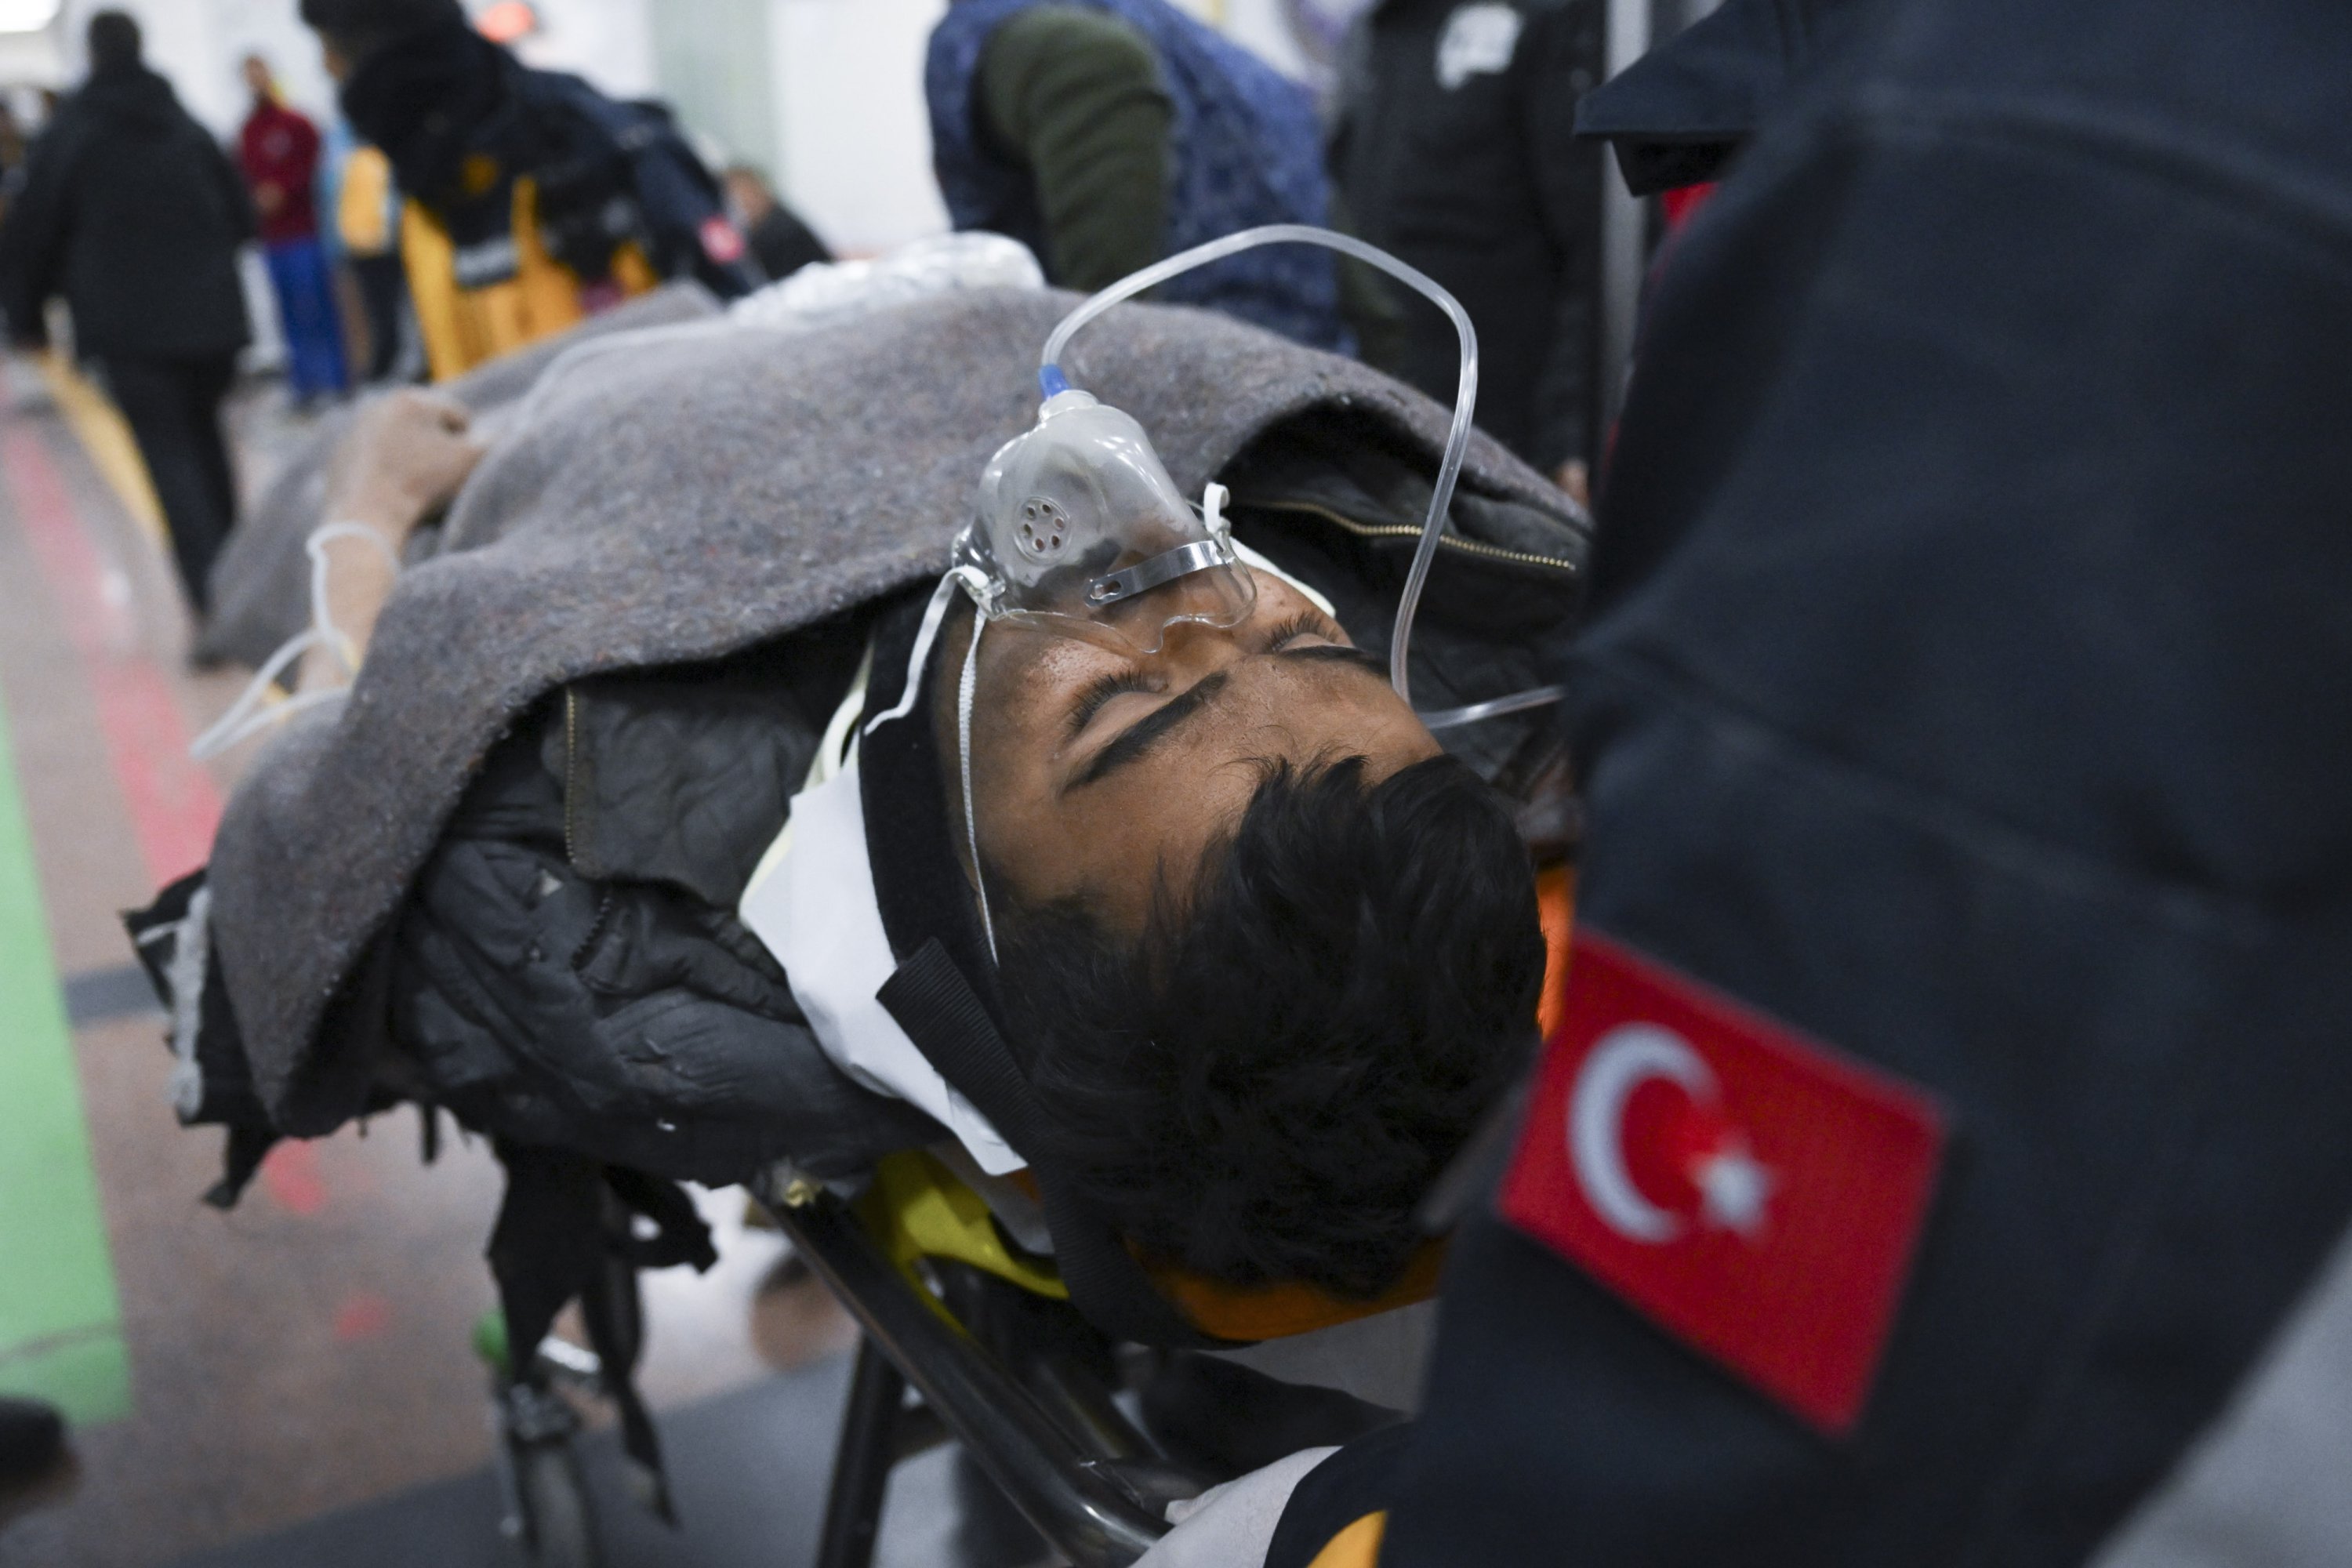 Mehmet Ali Şakiroğlu, 26, terbaring di tandu saat dia didorong ke rumah sakit setelah penyelamatannya pada jam ke-261 di provinsi Hatay setelah gempa bumi kembar yang melanda Türkiye tenggara, 16 Februari 2023. (Foto AA)